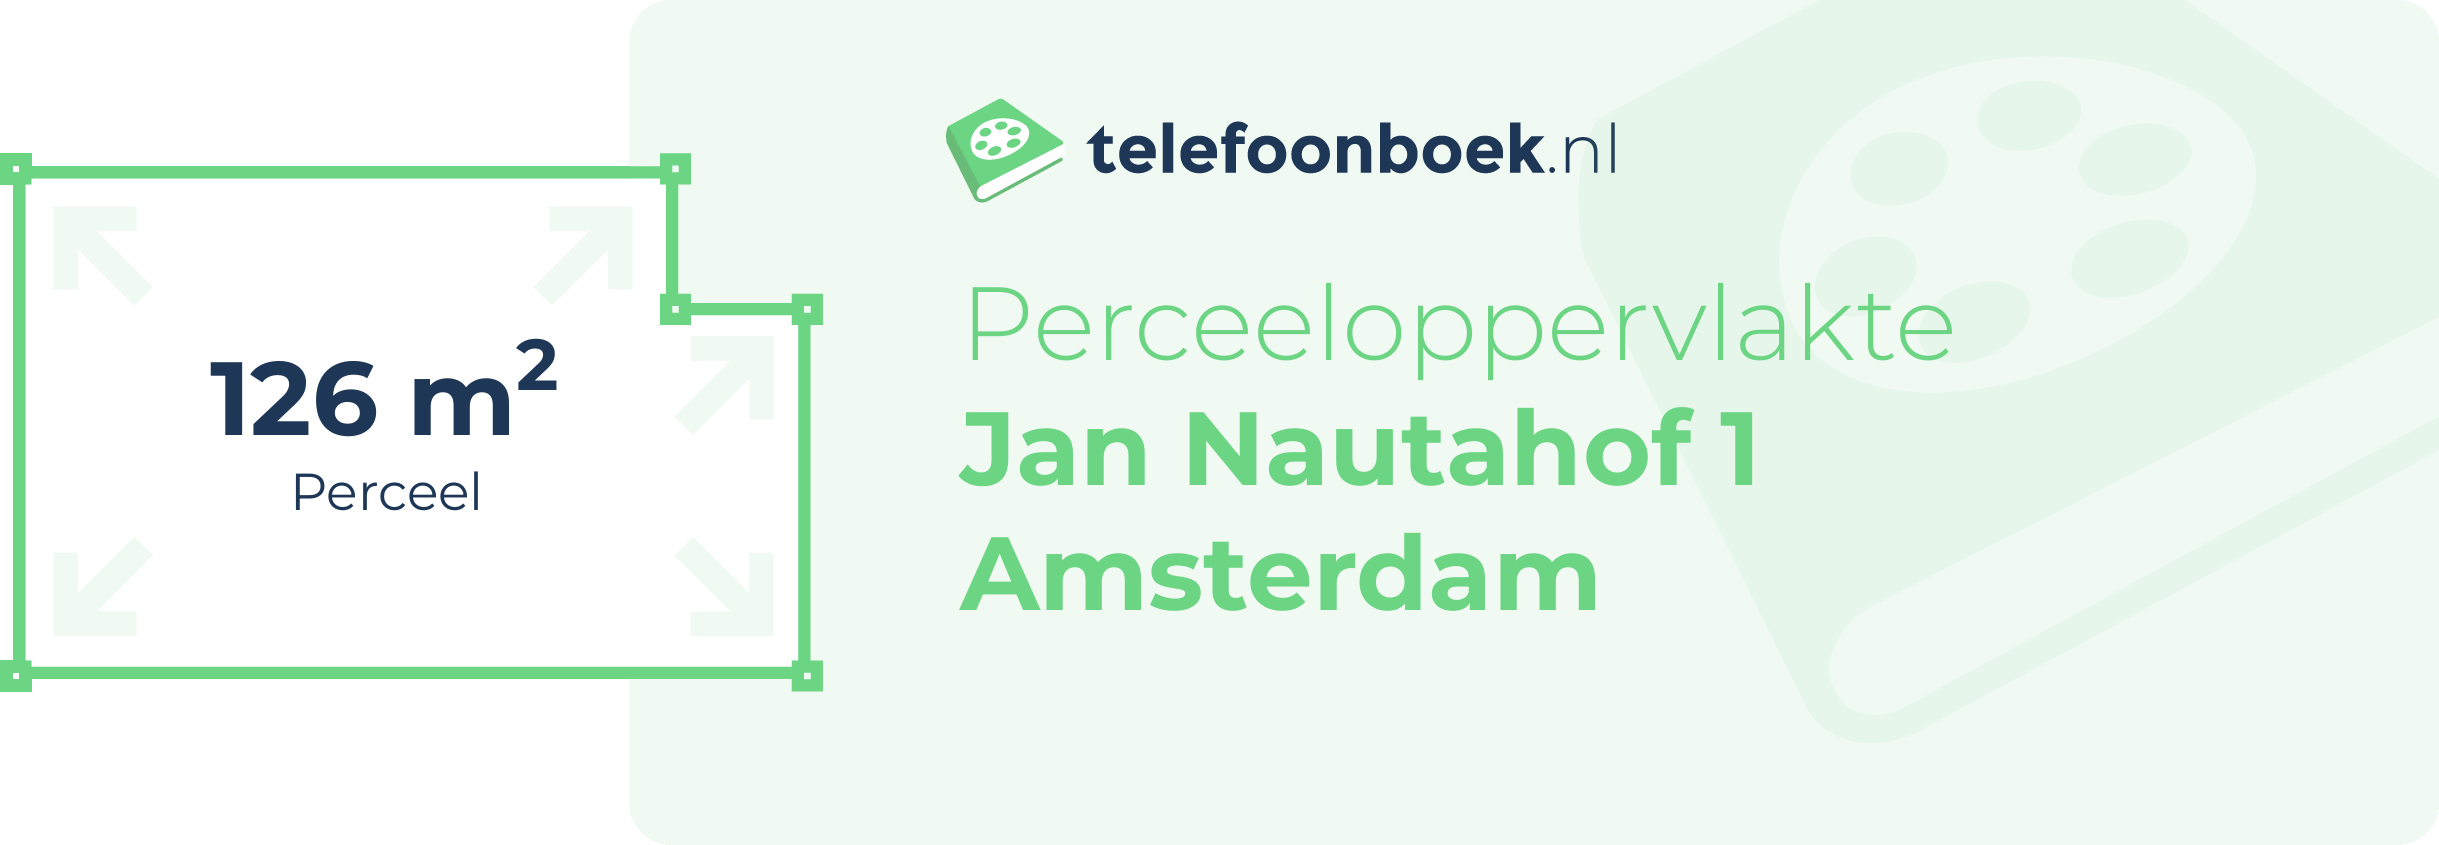 Perceeloppervlakte Jan Nautahof 1 Amsterdam